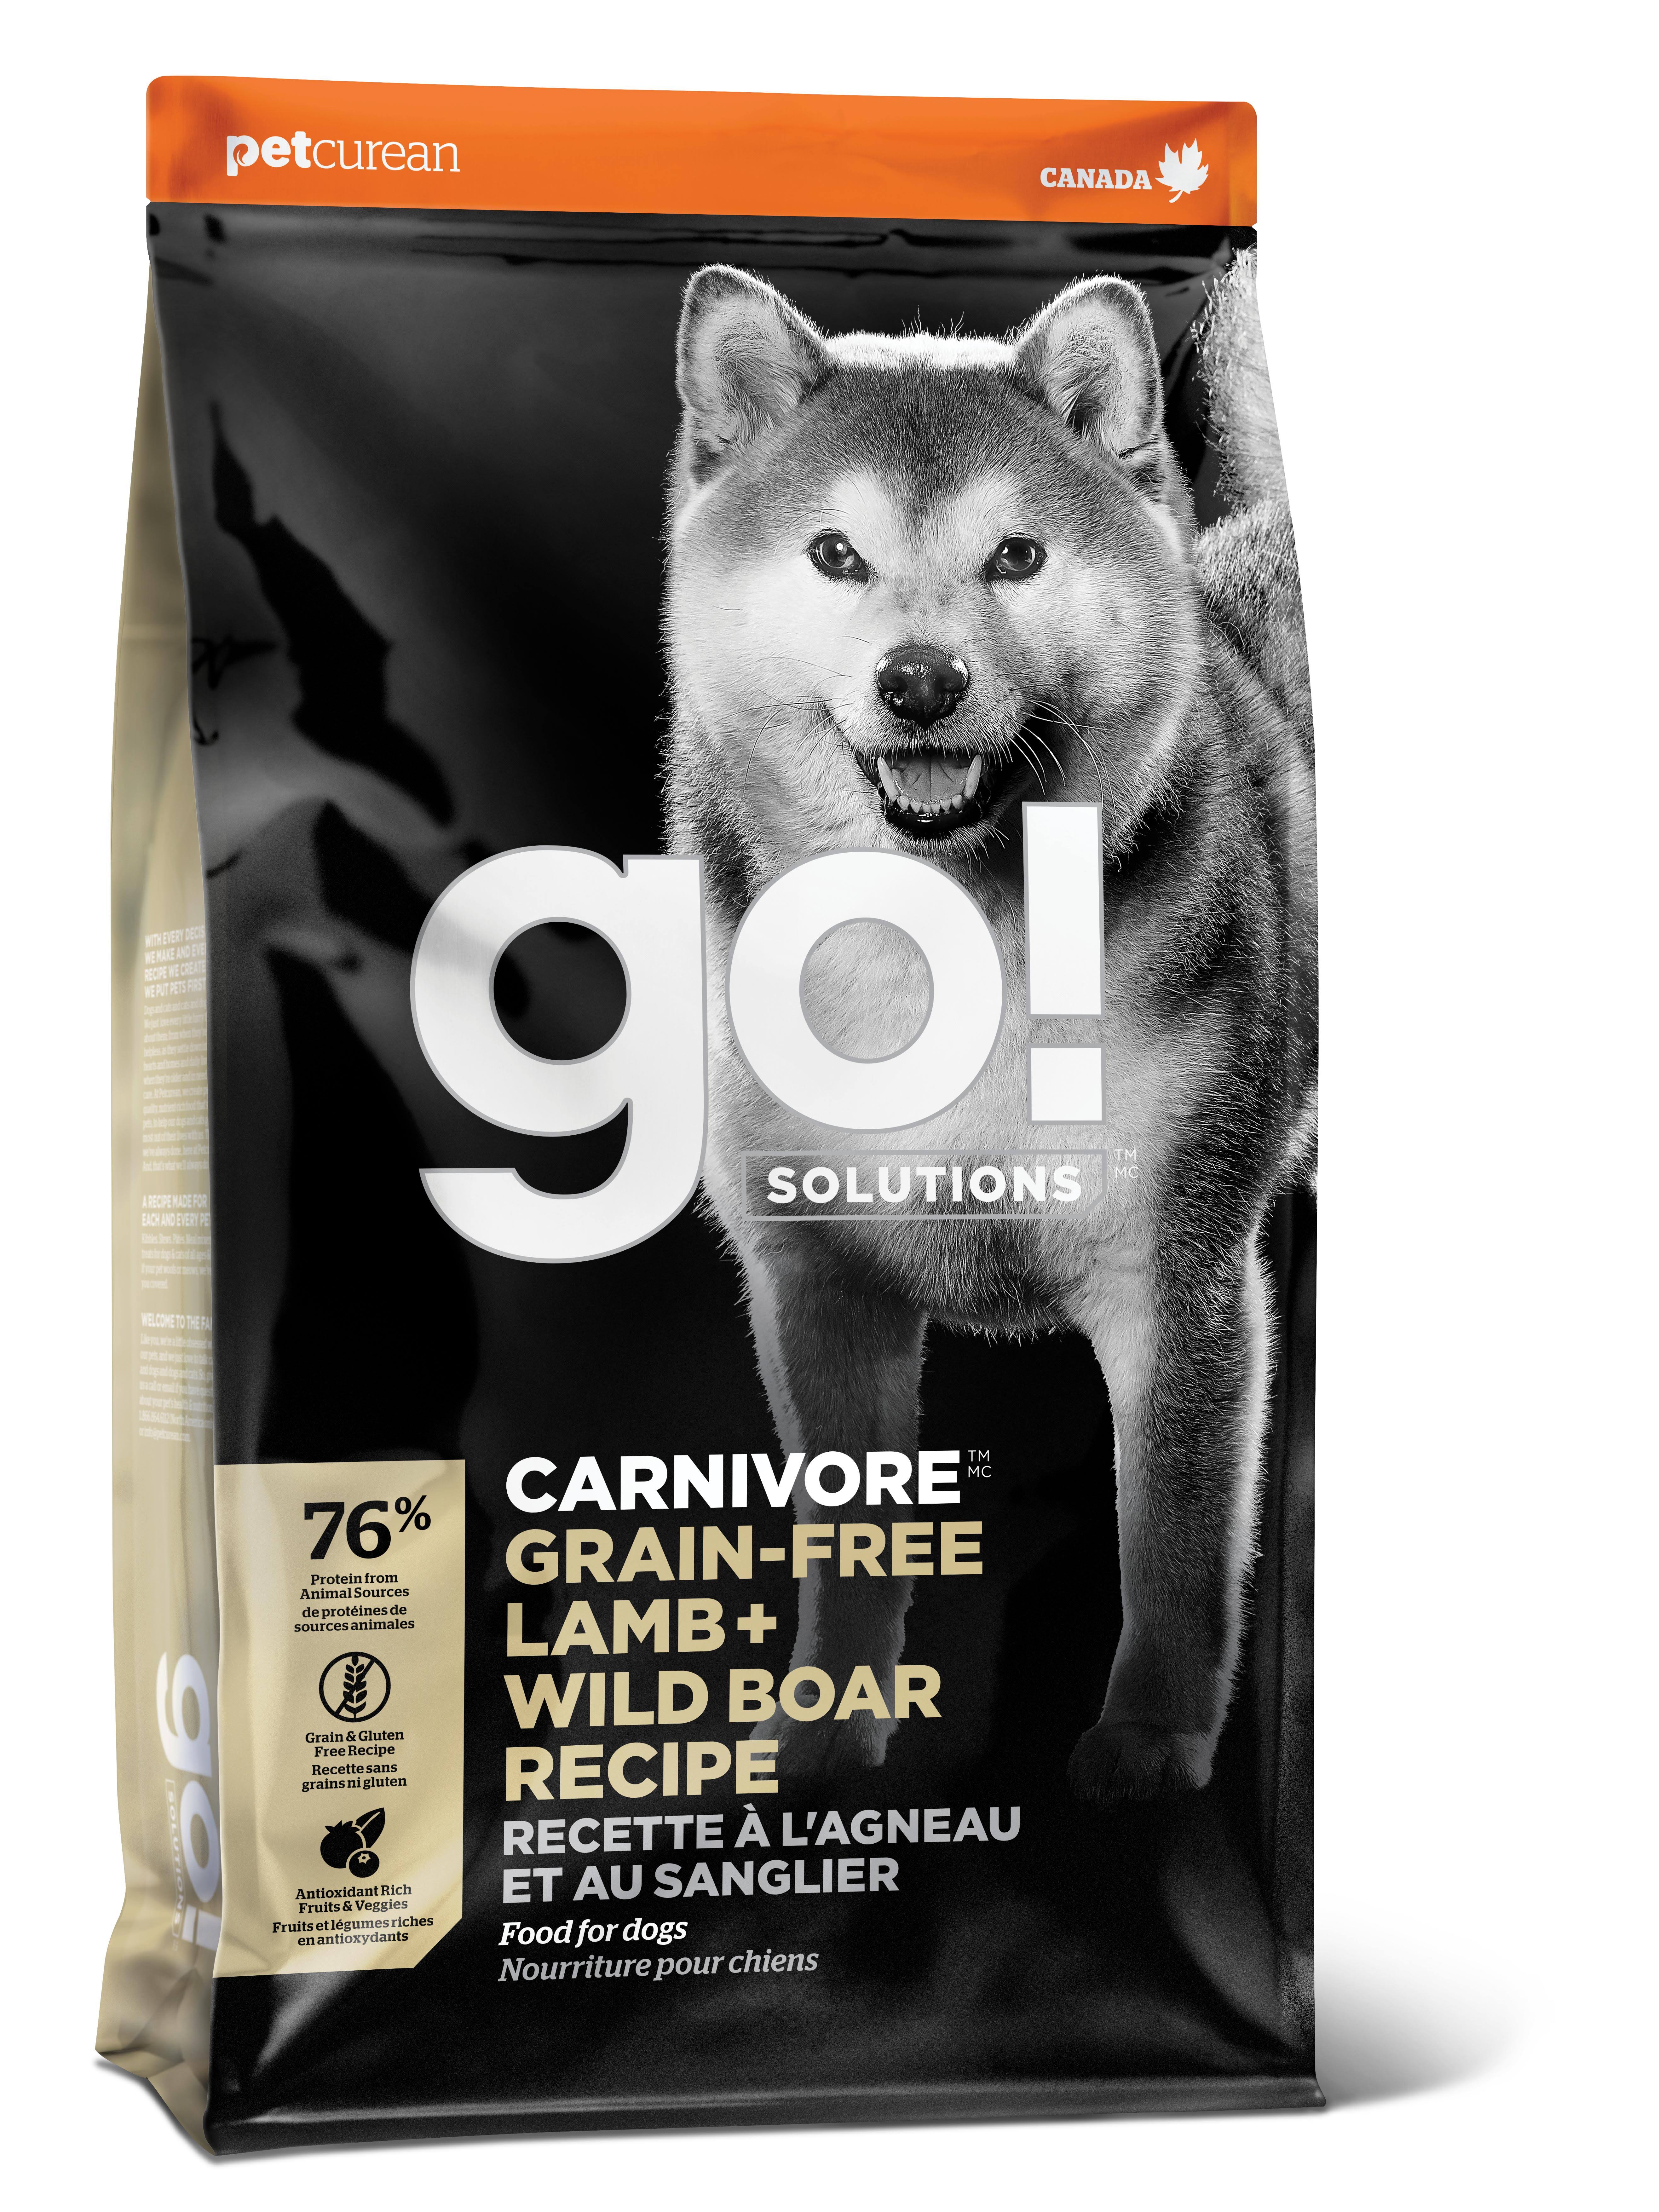 Go! Carnivore Grain-Free Lamb + Wild Boar Dry Dog Food, 12-lb